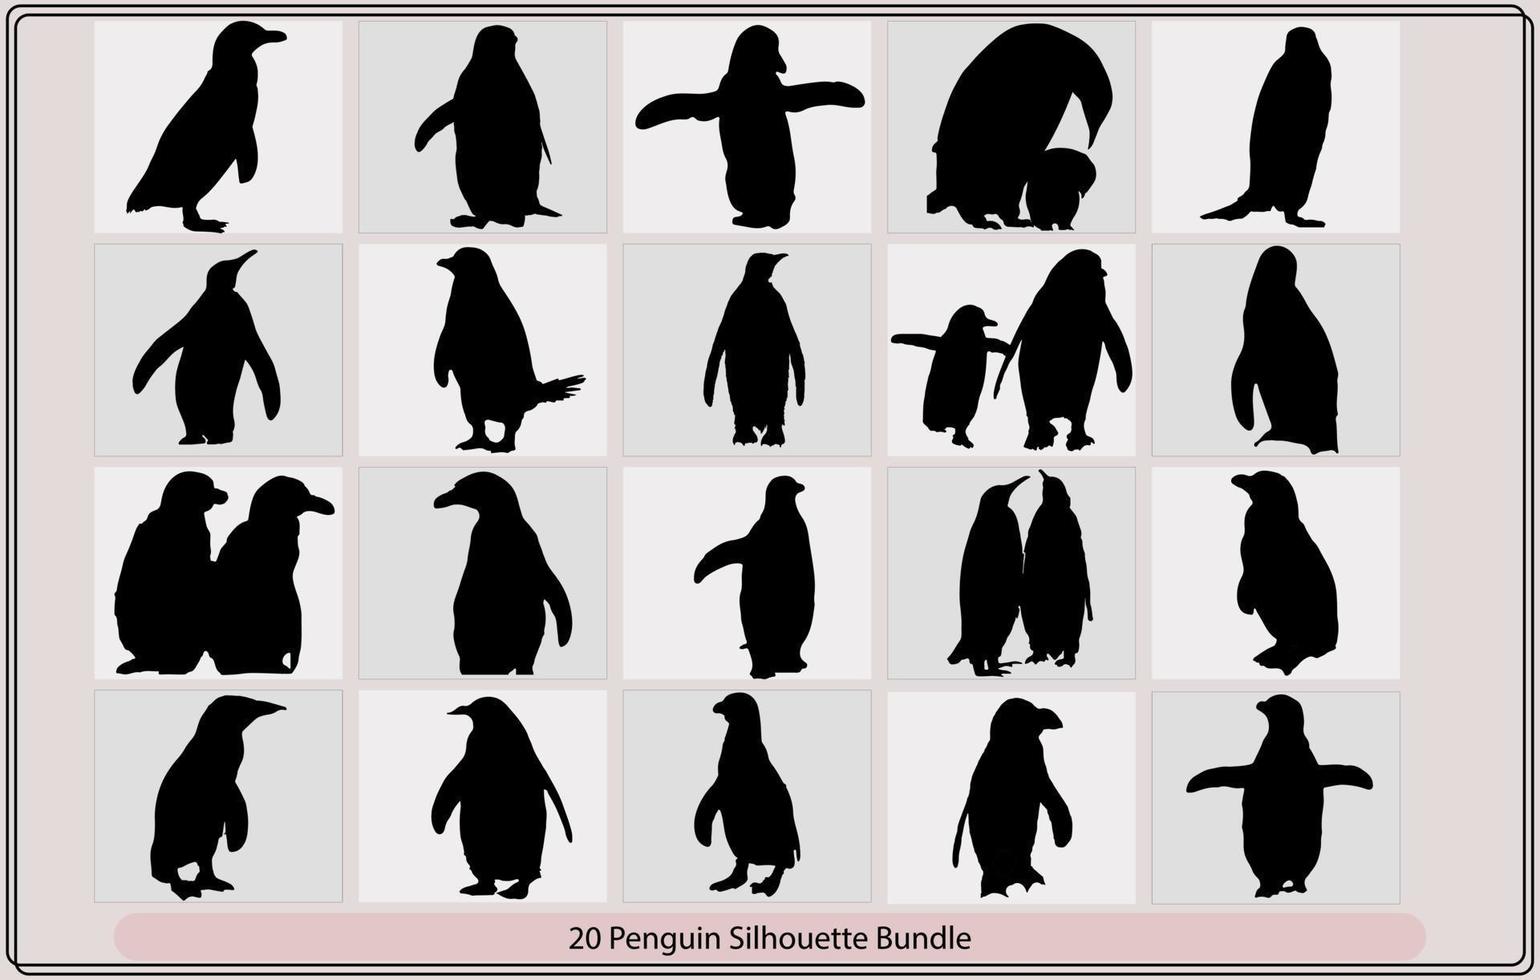 Penguins Silhouette Set,cute penguin silhouette vector design illustration,Vector illustration of a black silhouette of a penguin.,